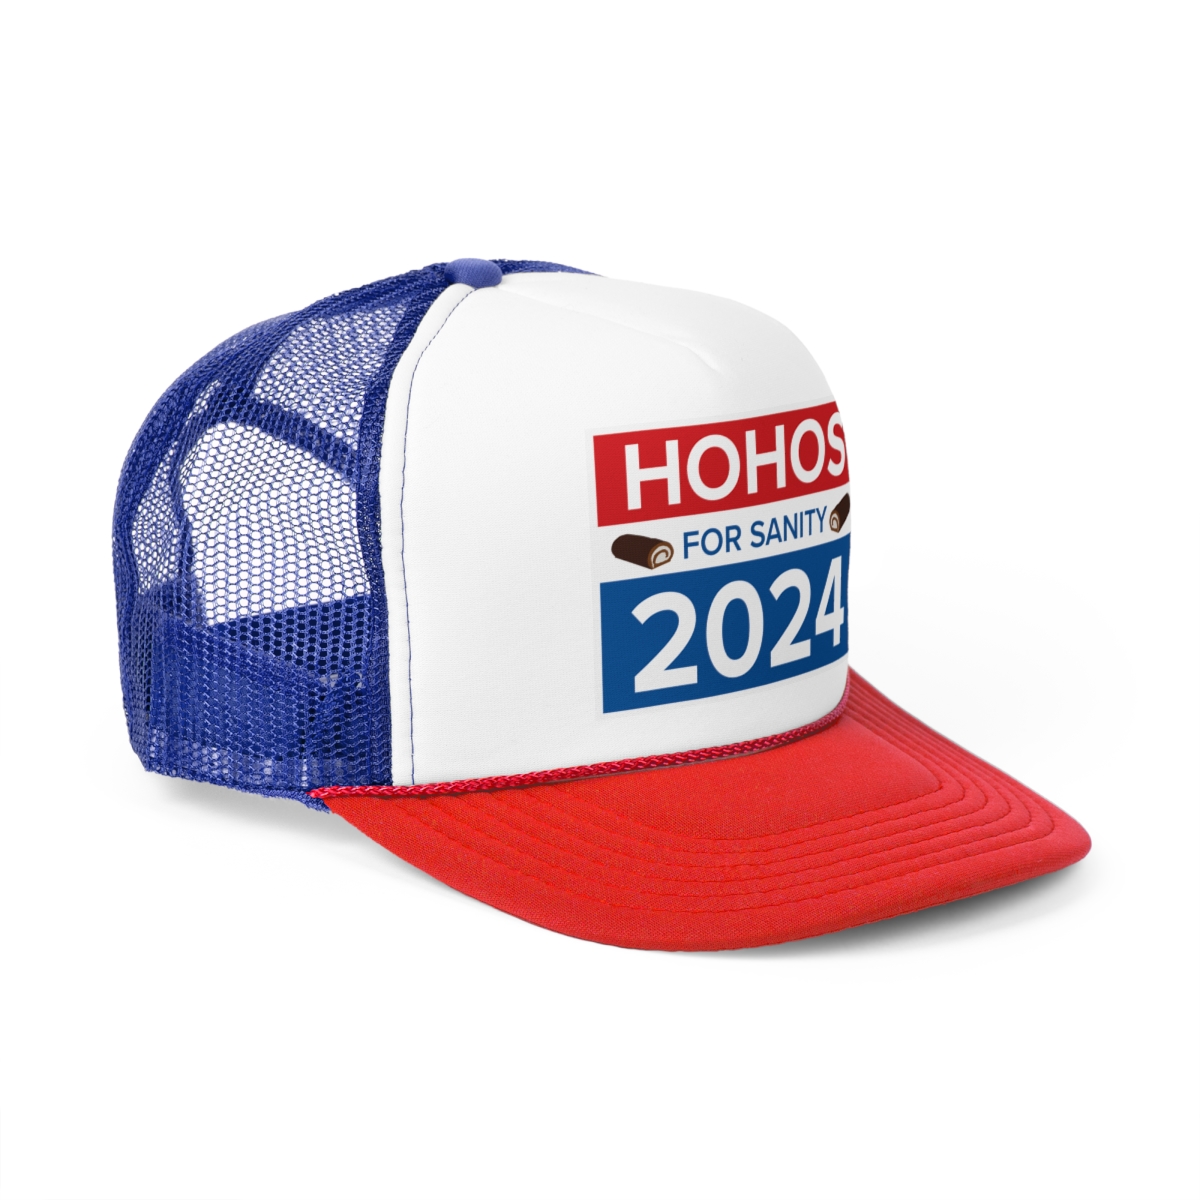 Ho Hos For Sanity 2024 (Trucker Caps) product thumbnail image